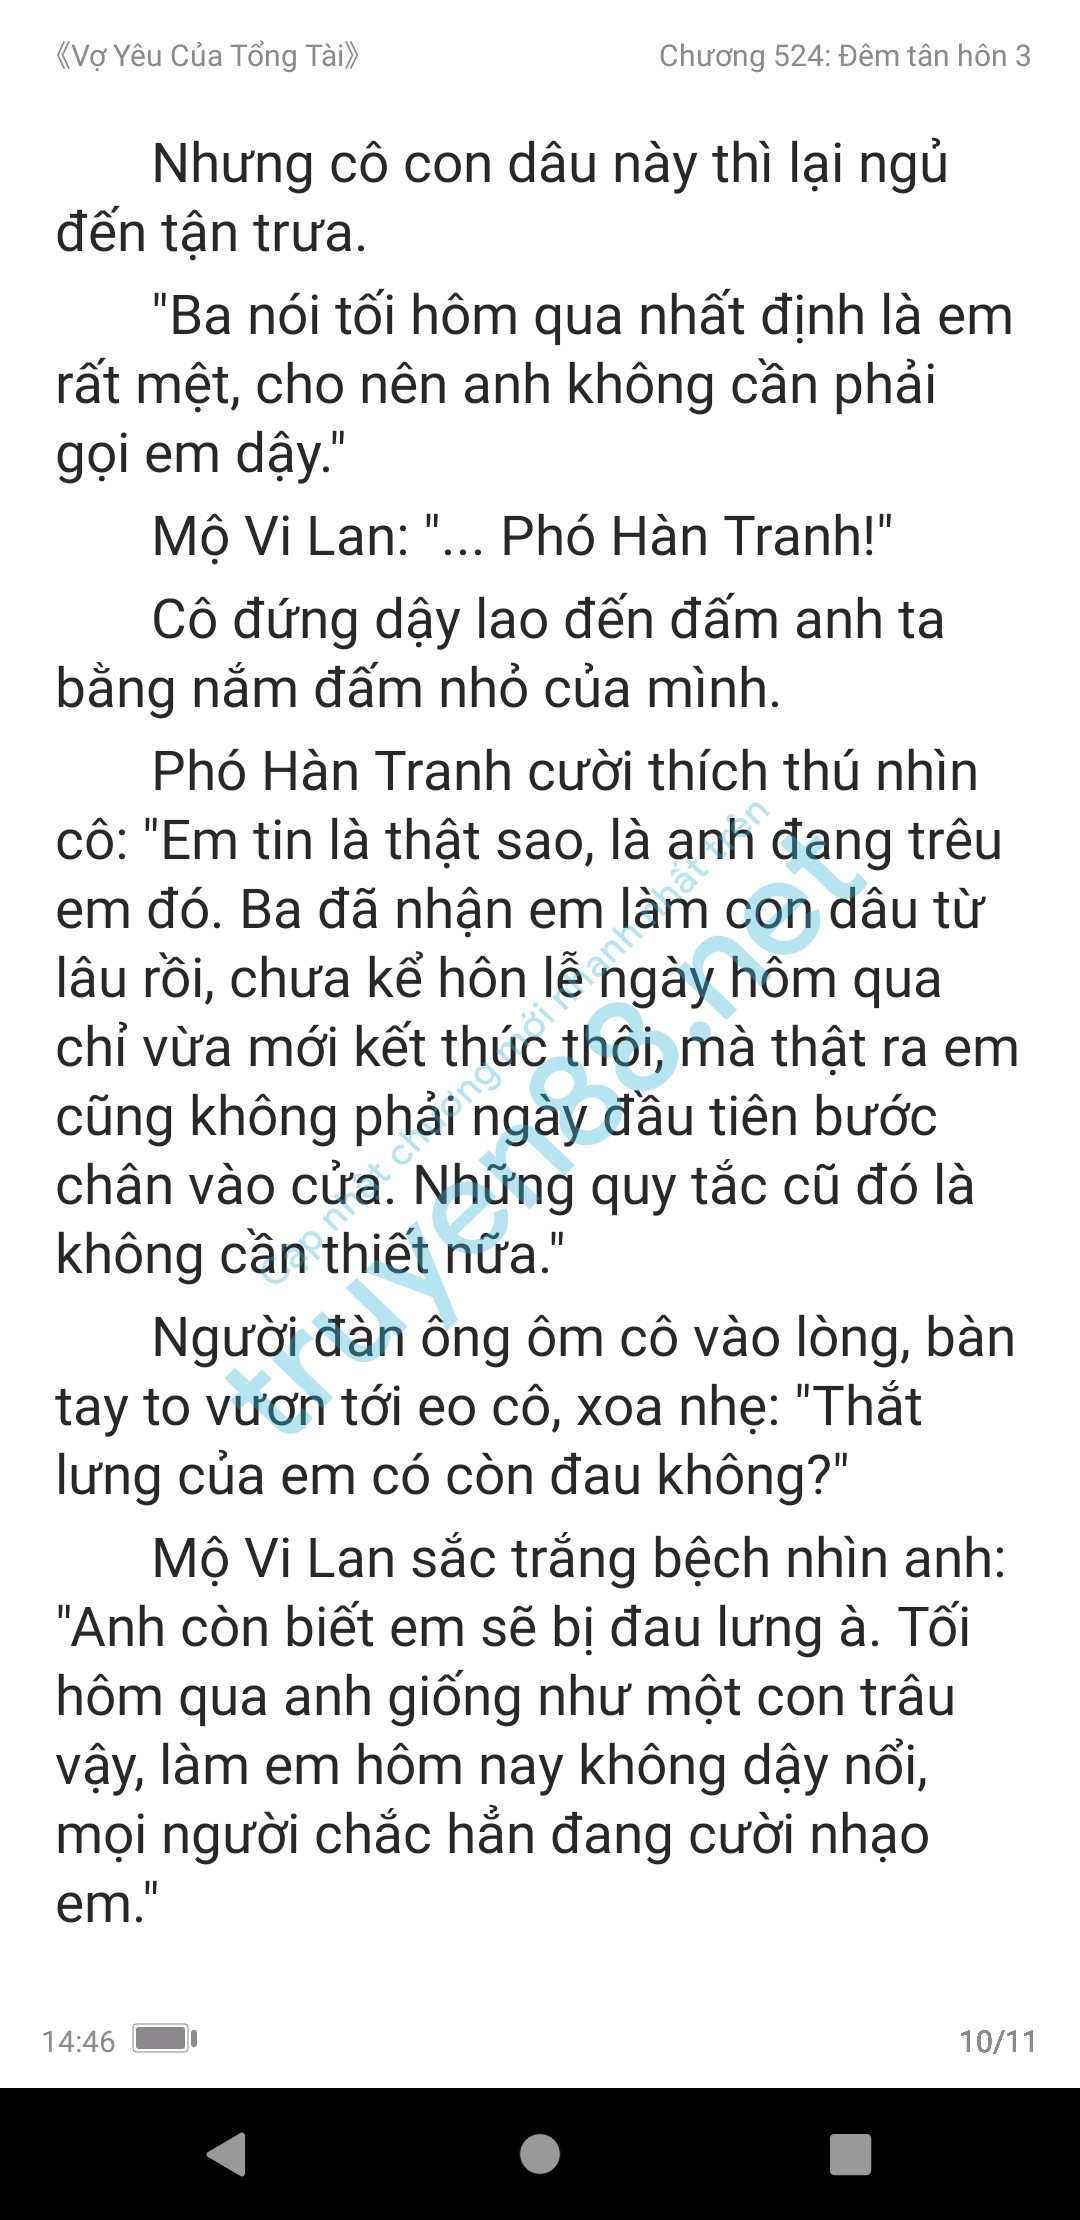 vo-yeu-cua-tong-tai-mo-vi-lan--pho-han-tranh-534-0